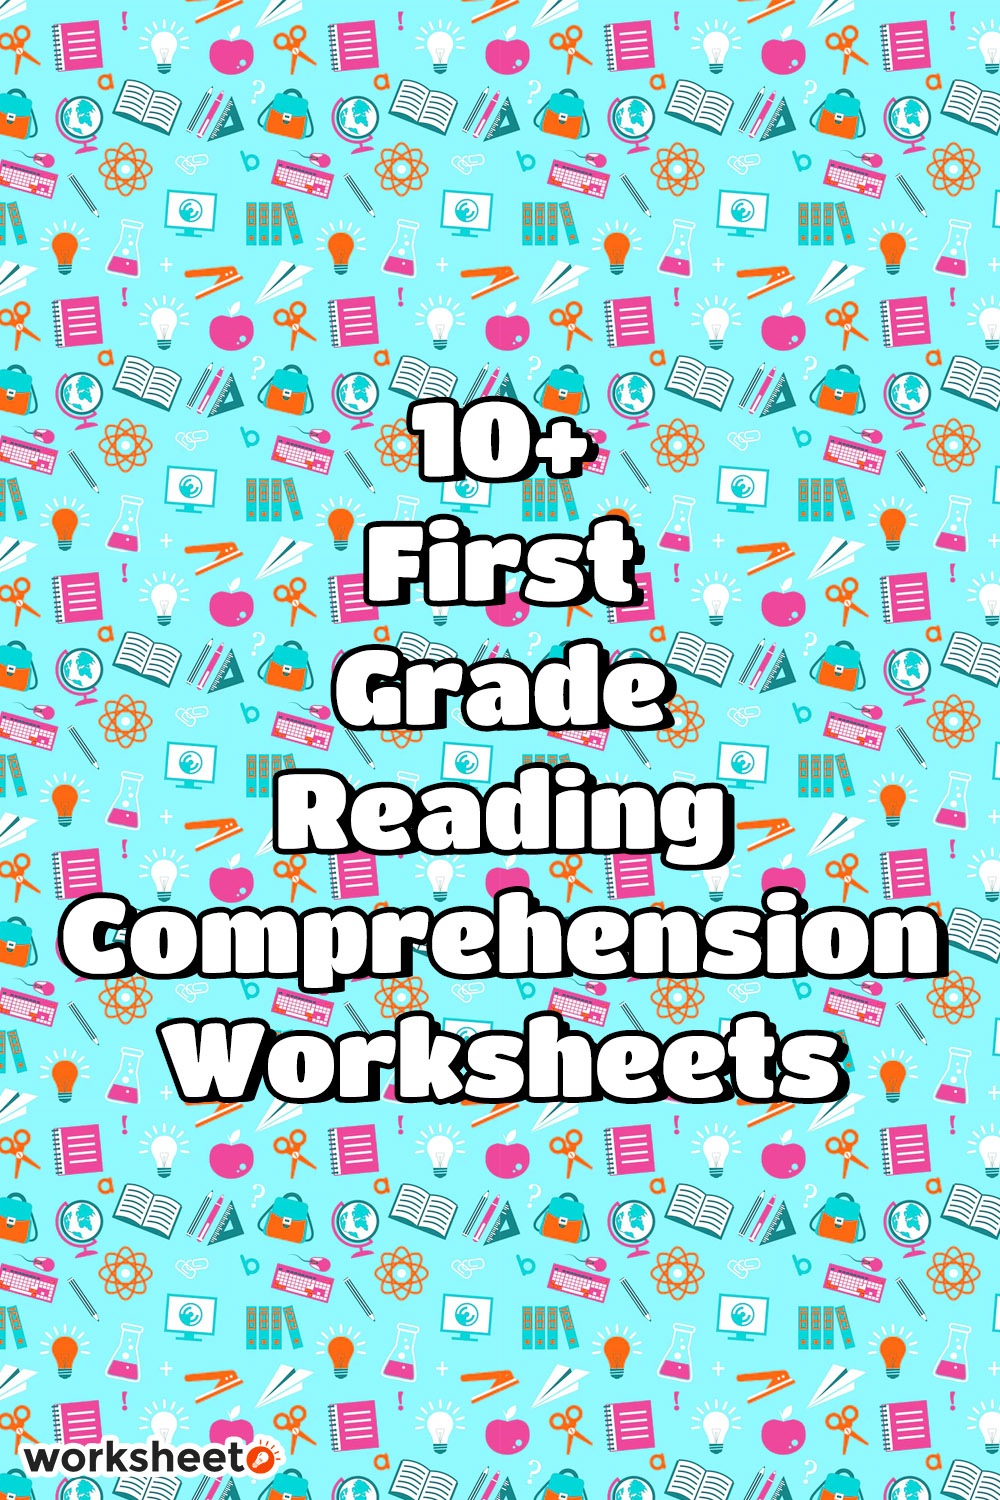 9 Images of First Grade Reading Comprehension Worksheets